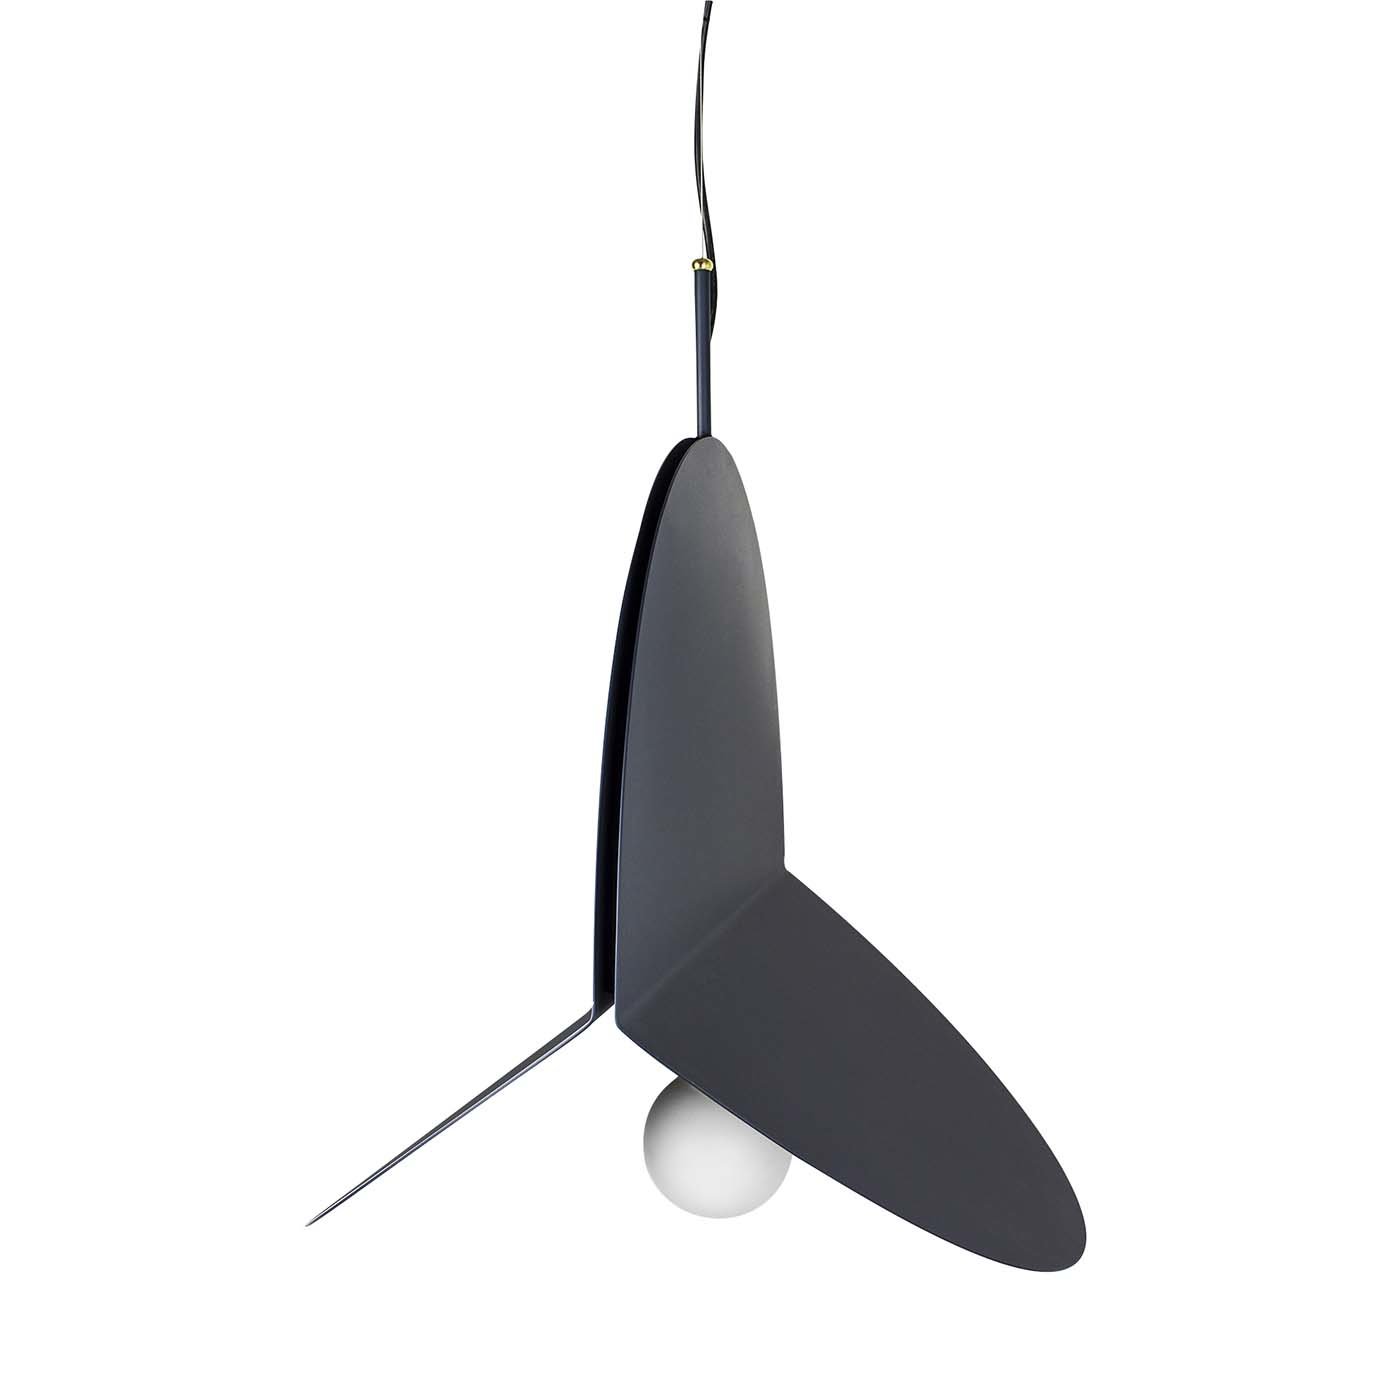 Pago S Pendant Lamp by Alalda Design - Main view